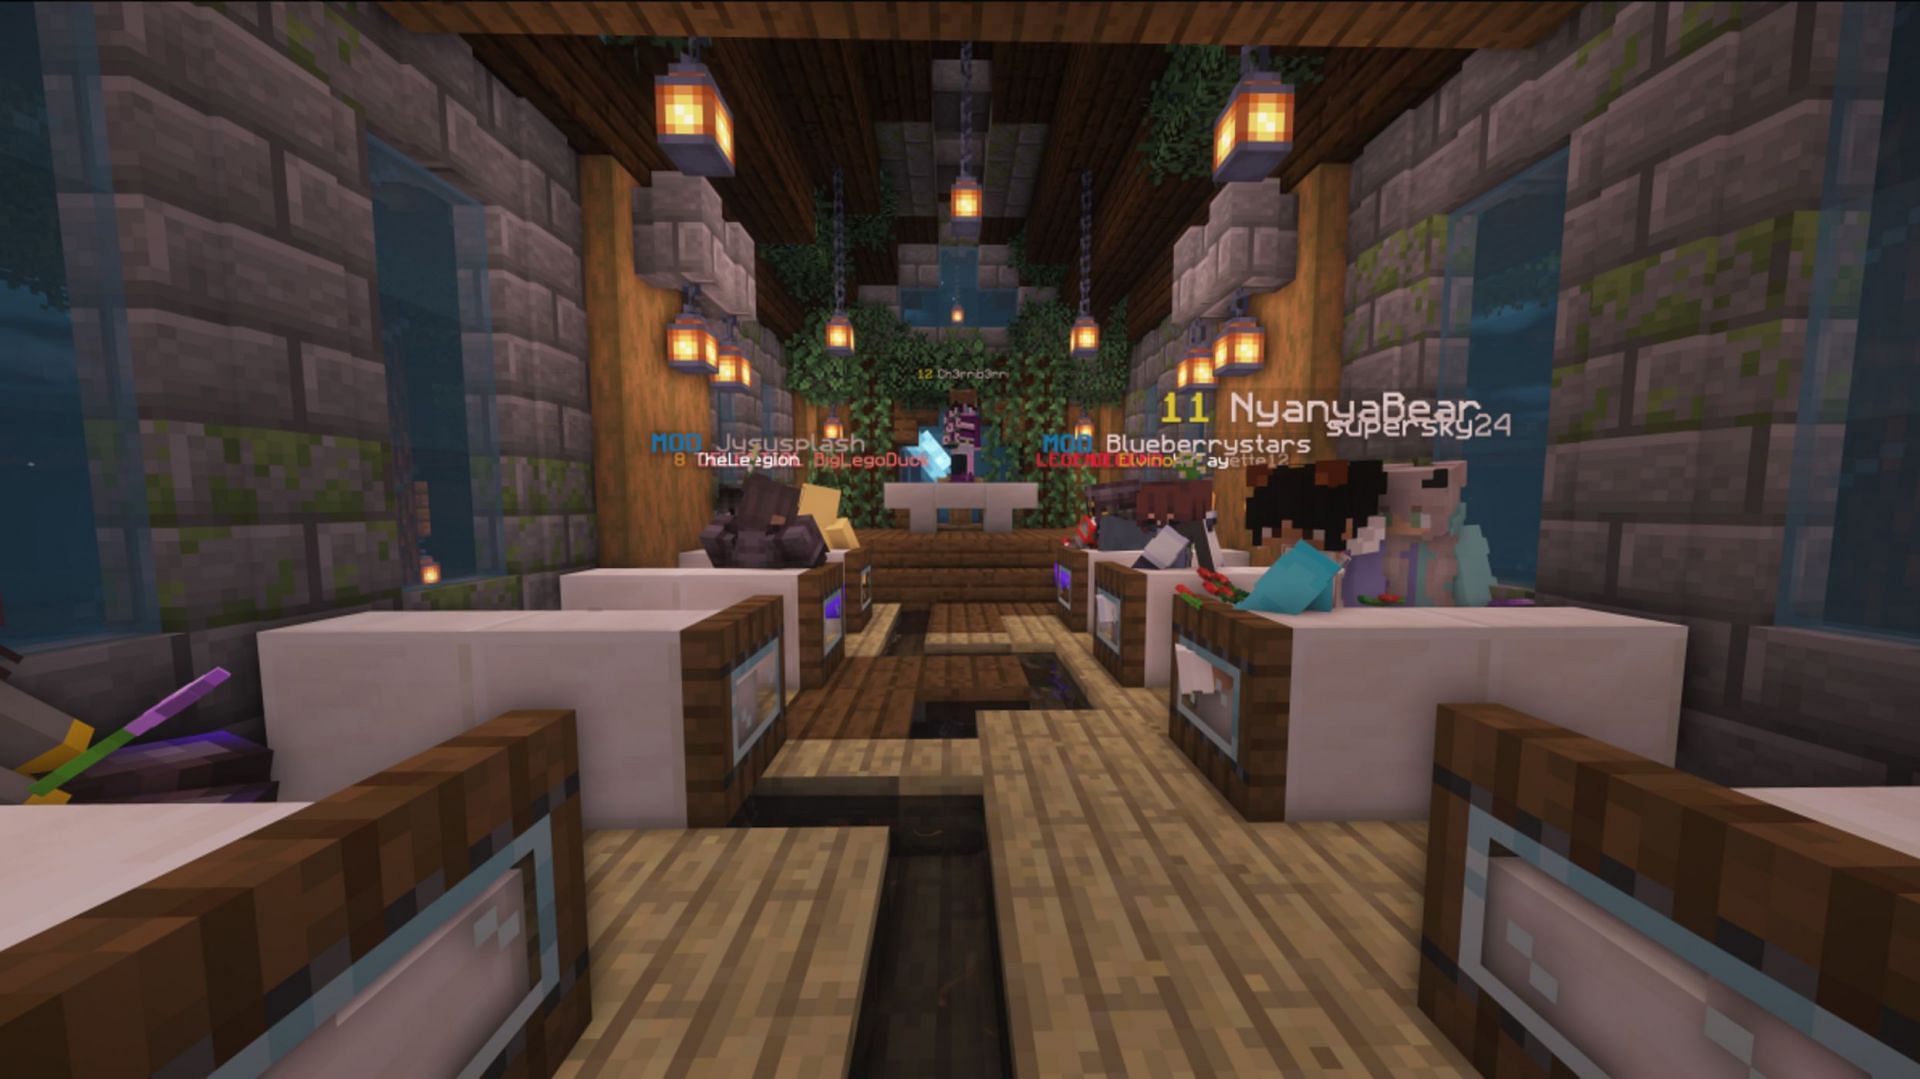 Players convening in Hearthcraft (Image via Keizizze/Planet Minecraft)